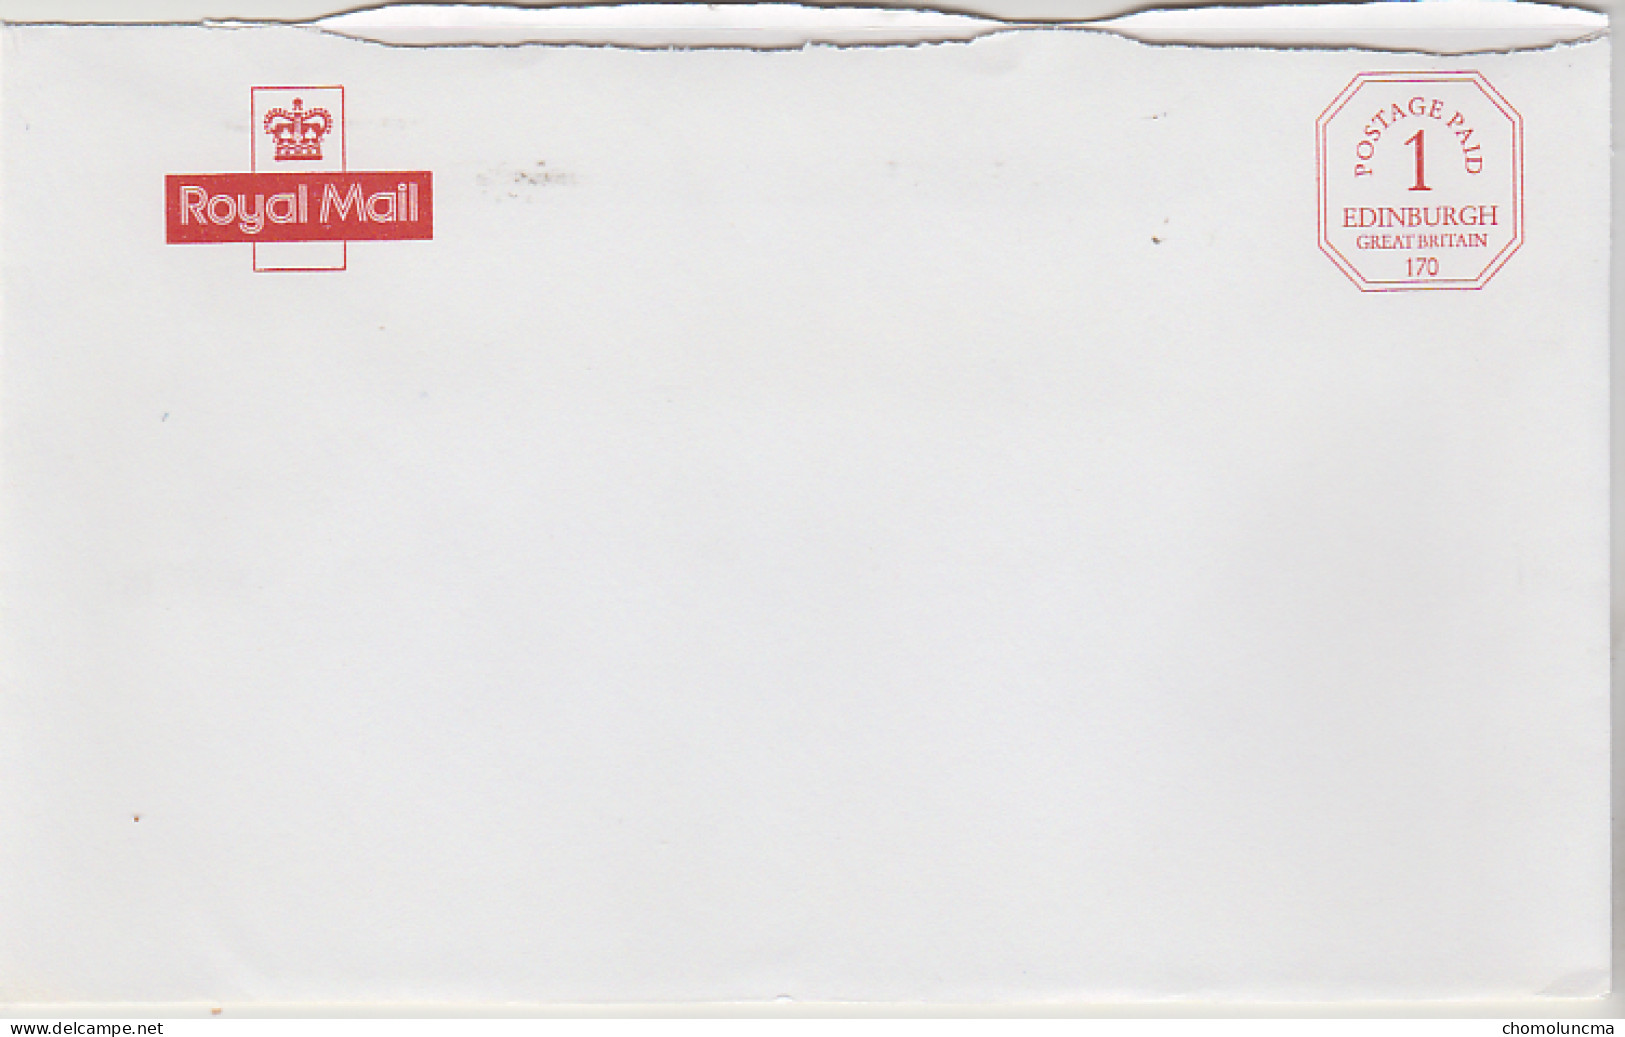 Royal Mail Cancel Postage Paid Edinburgh Printed In Red Port Payé Du Service Philatélique De Grande Bretagne - Dienstmarken